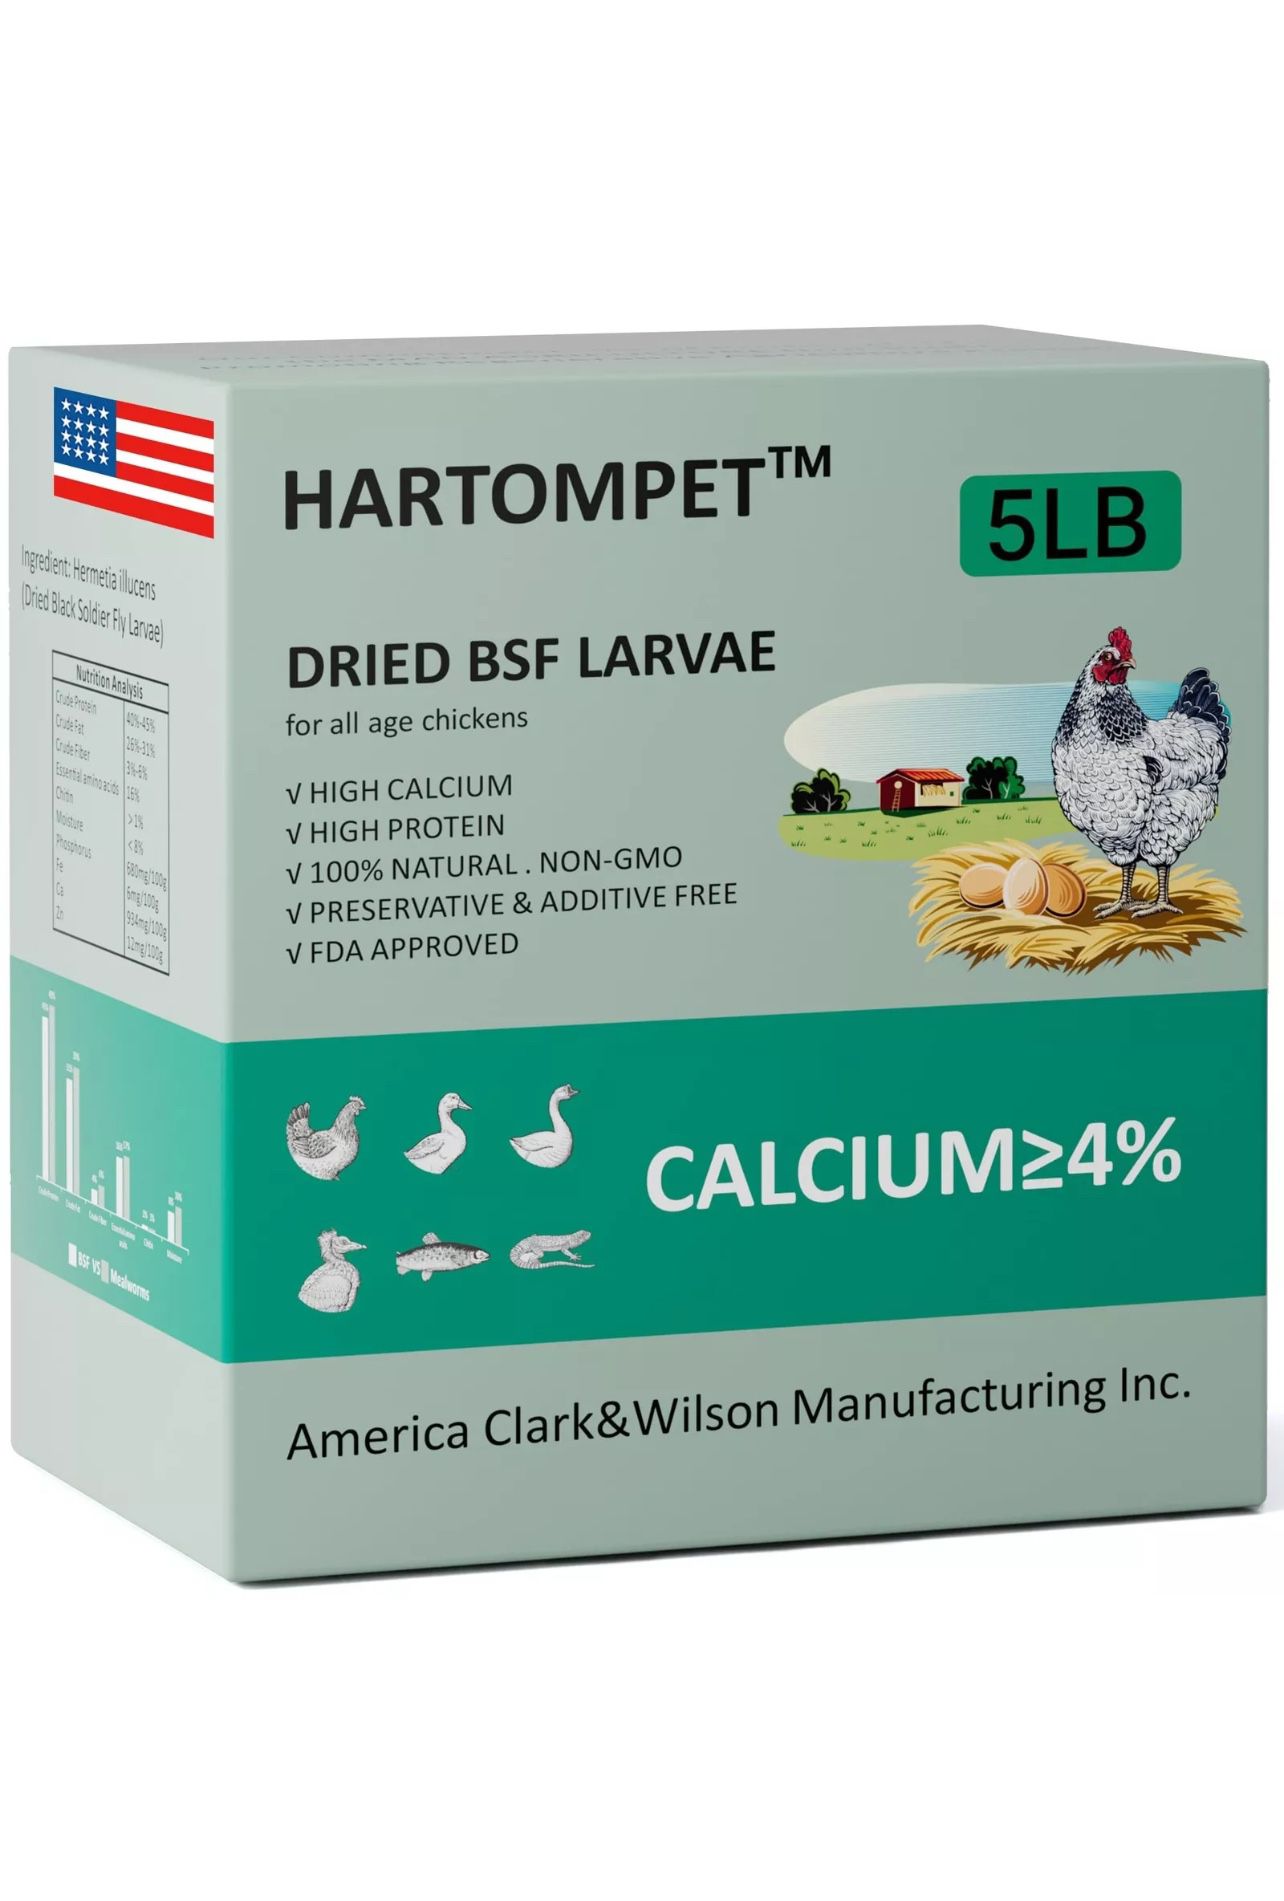 High Calcium Hartompet BSFL Chicken Feed Additive - 85X More Calcium - 5 lbs